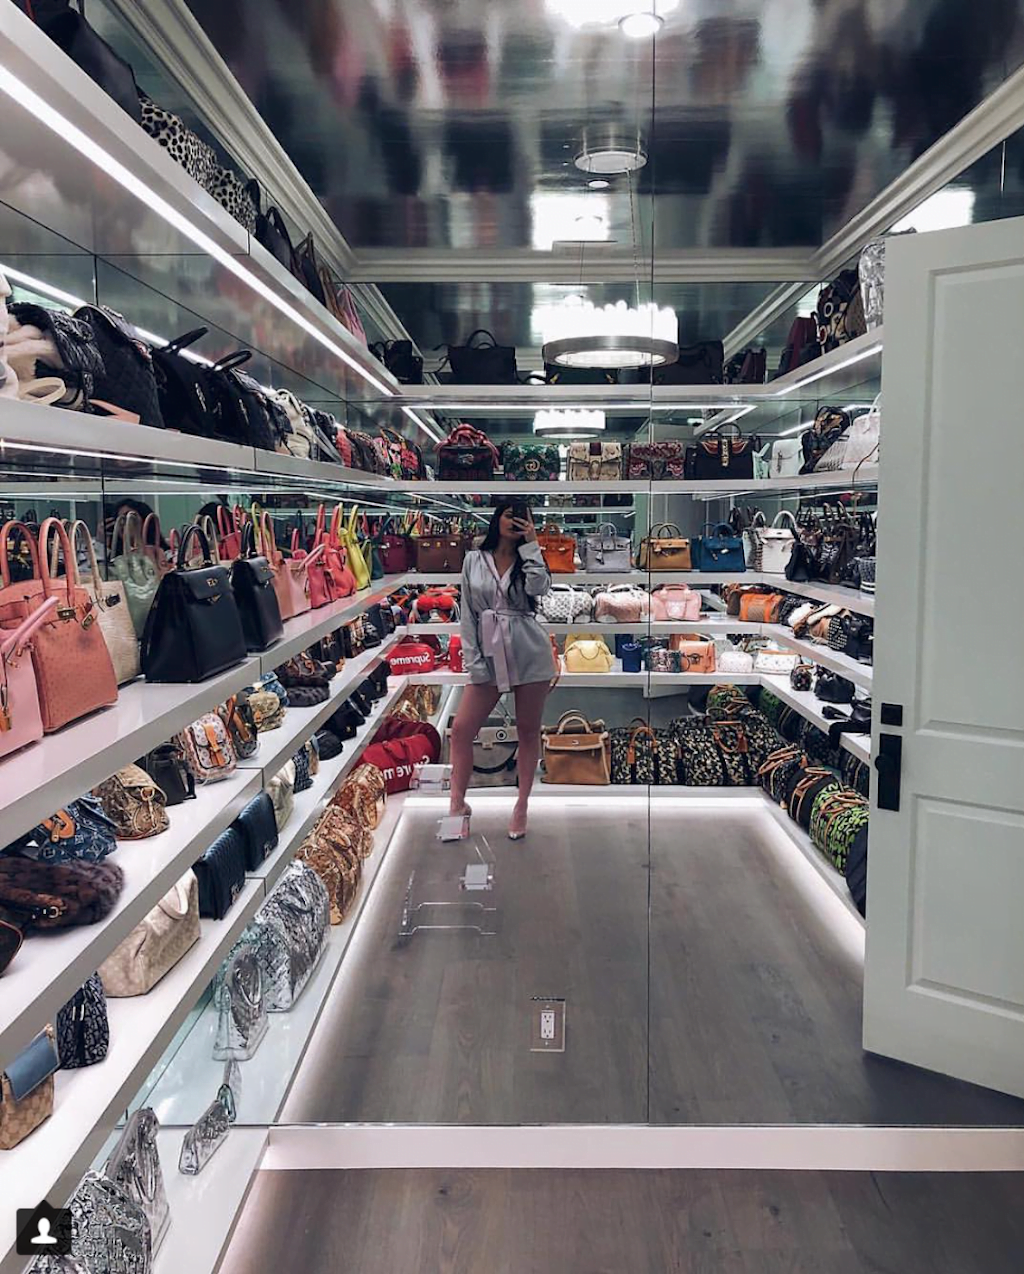 Kris Jenner Birkin Closet - Kris Jenner Neon Sign Need Money For